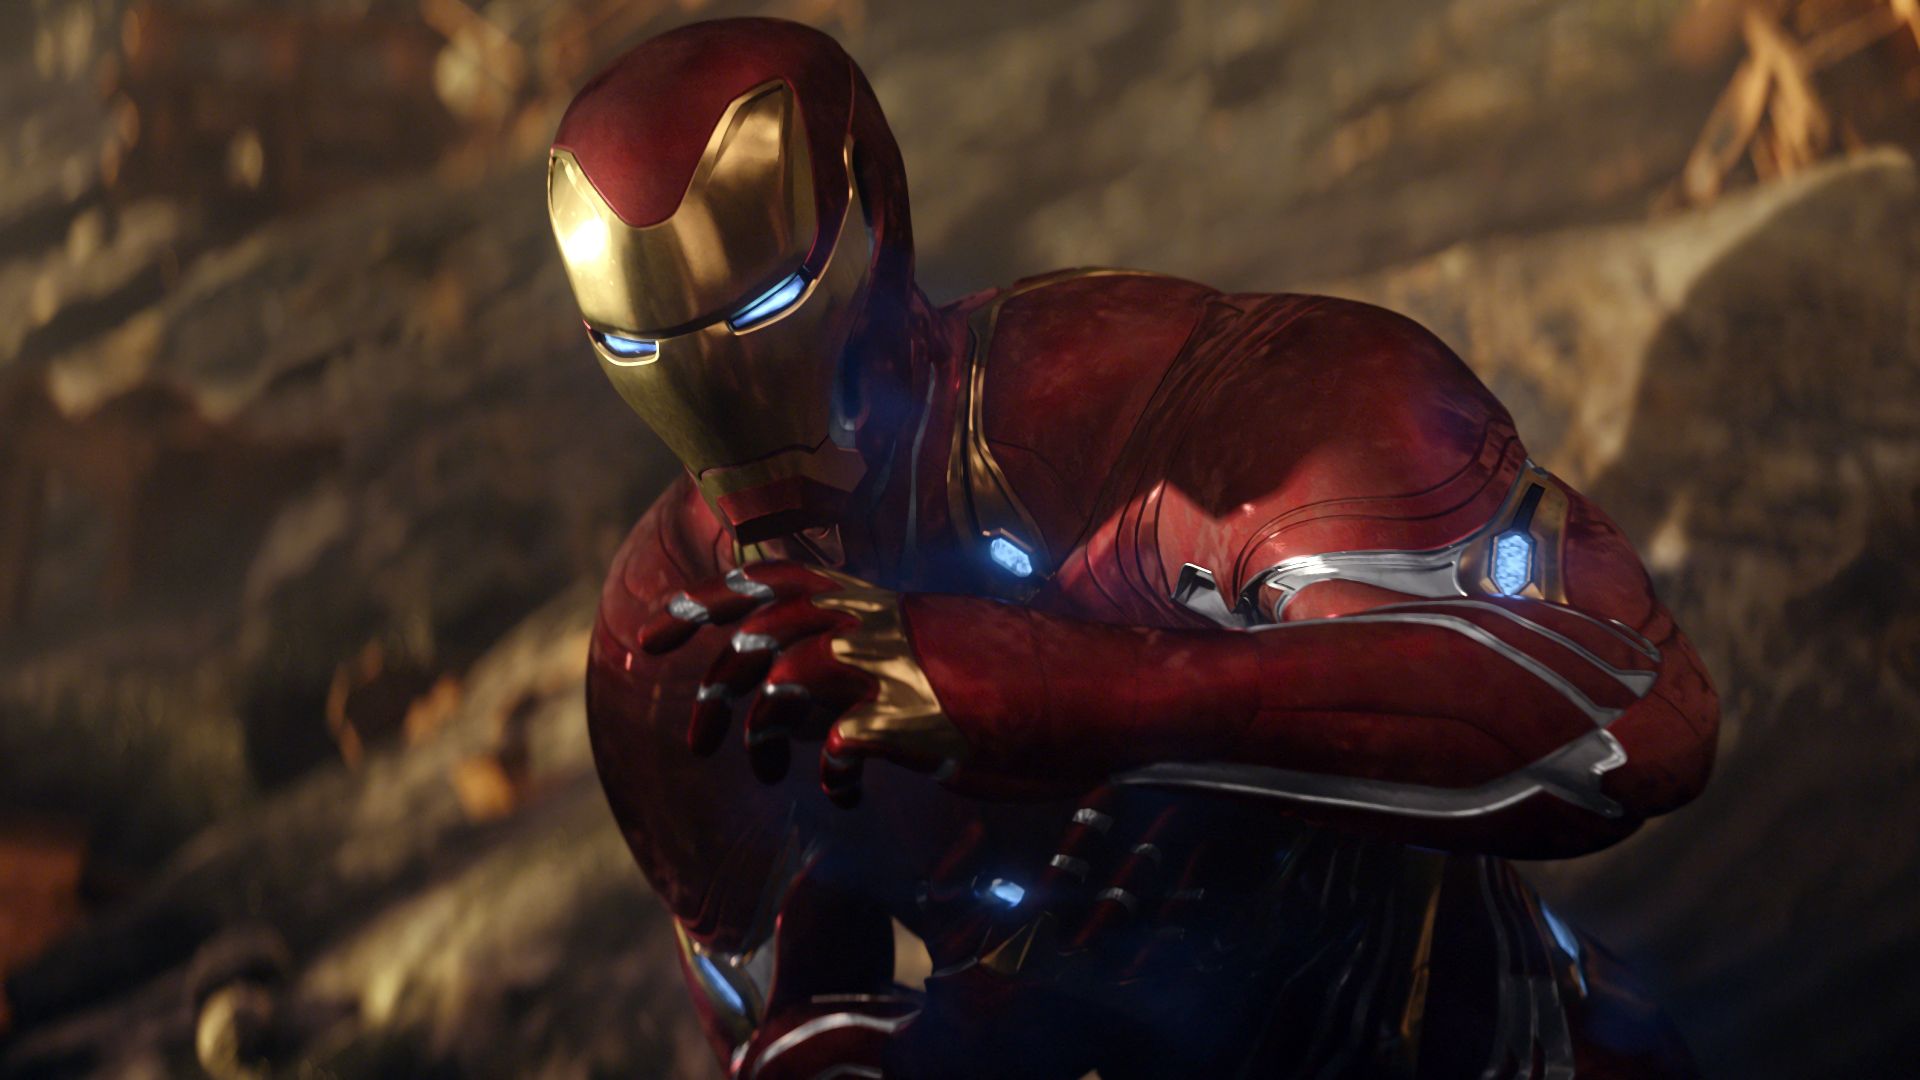 Wallpaper Avengers: Infinity War, Iron Man, 4k, Movies #178001920 x 1080